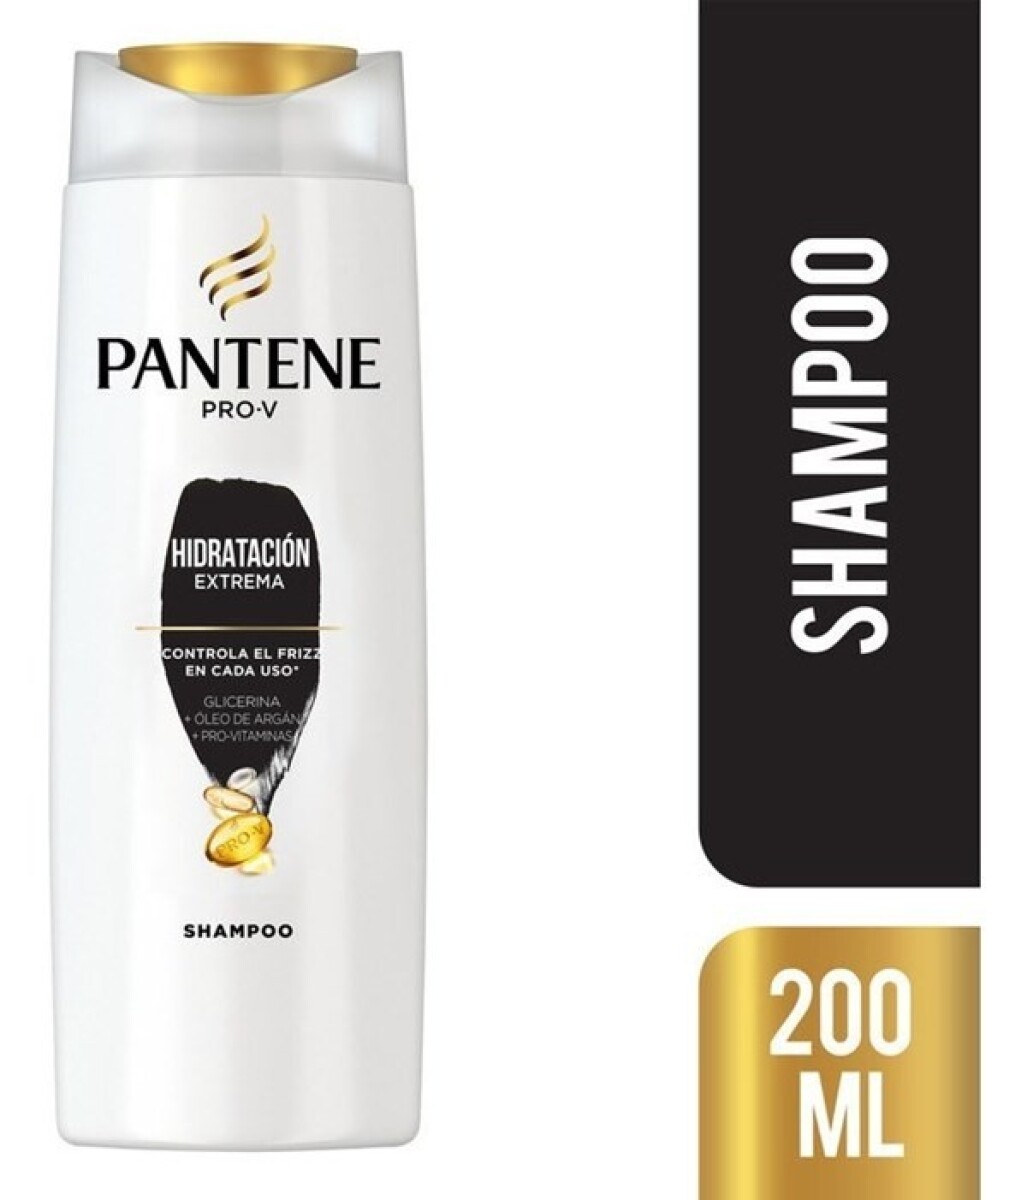 Pantene Shampoo Hidrataciòn Extrema 200ml 